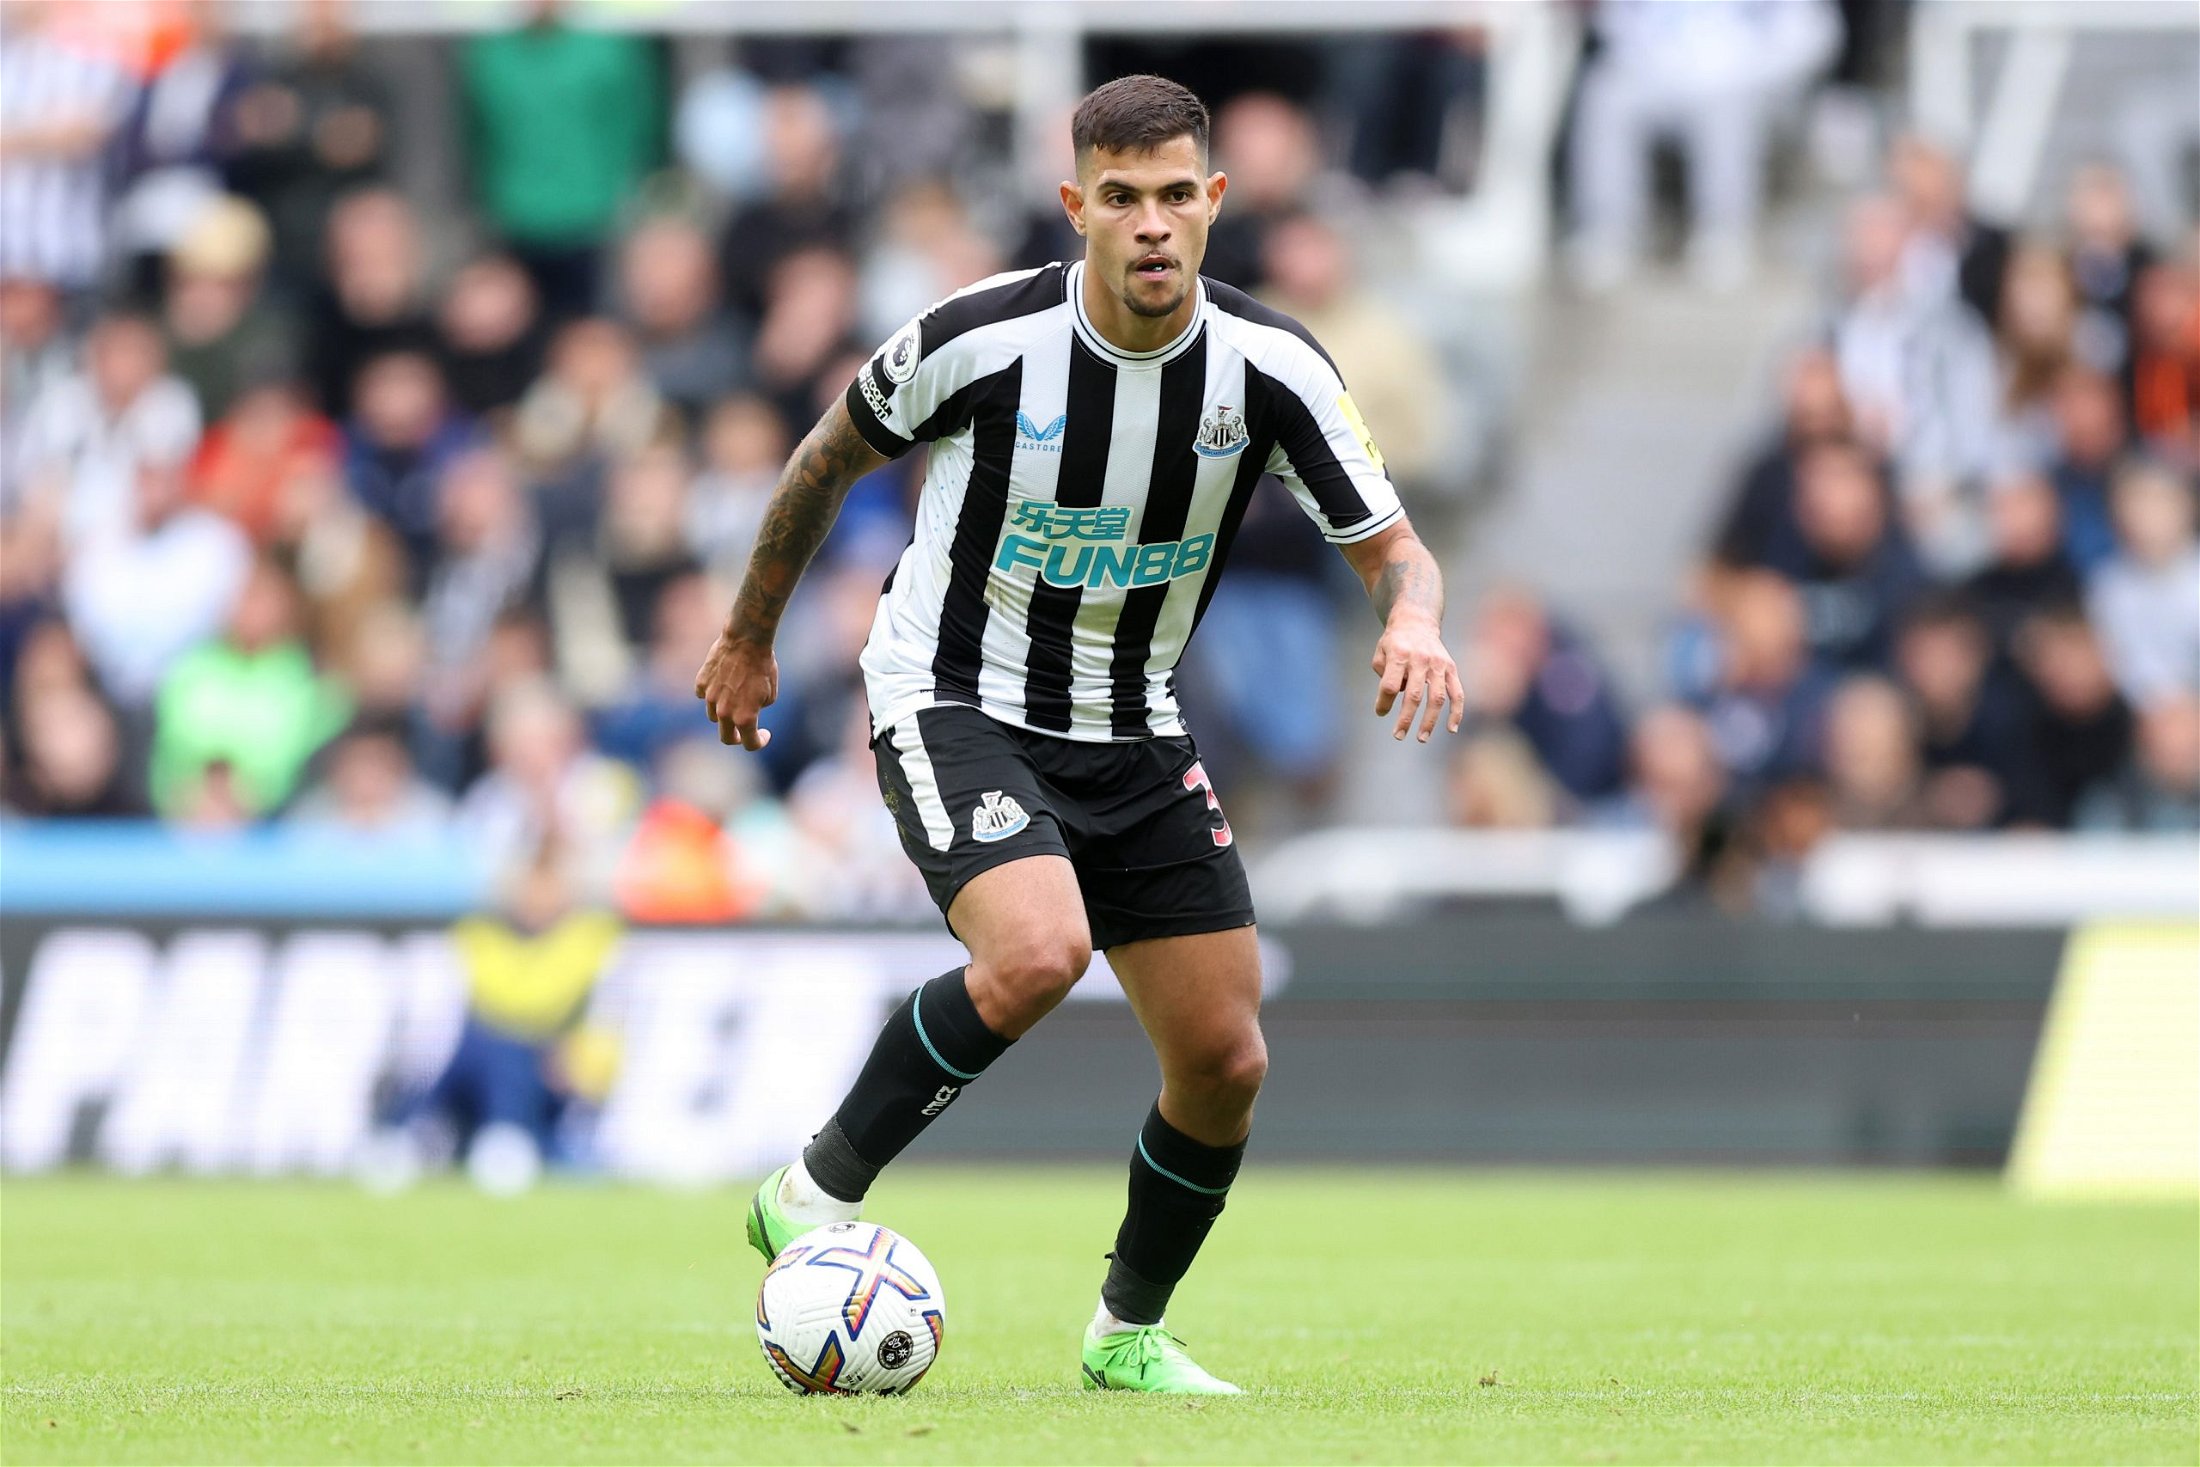 Good news as Newcastle United's best midfielder returns in full fit to face Man Utd